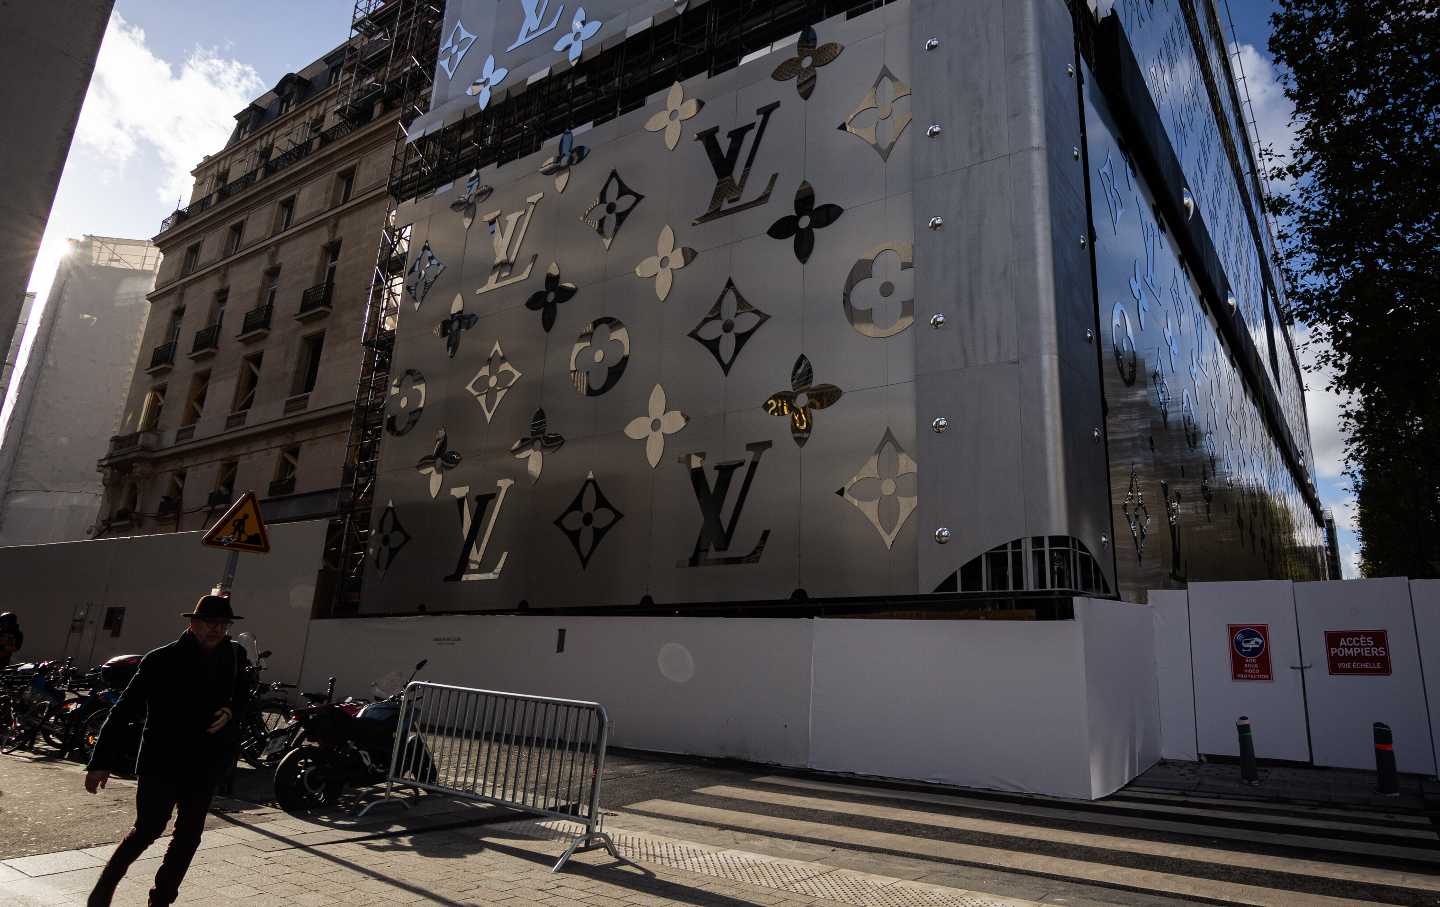 Louis Vuitton’s branding opportunity in Paris.